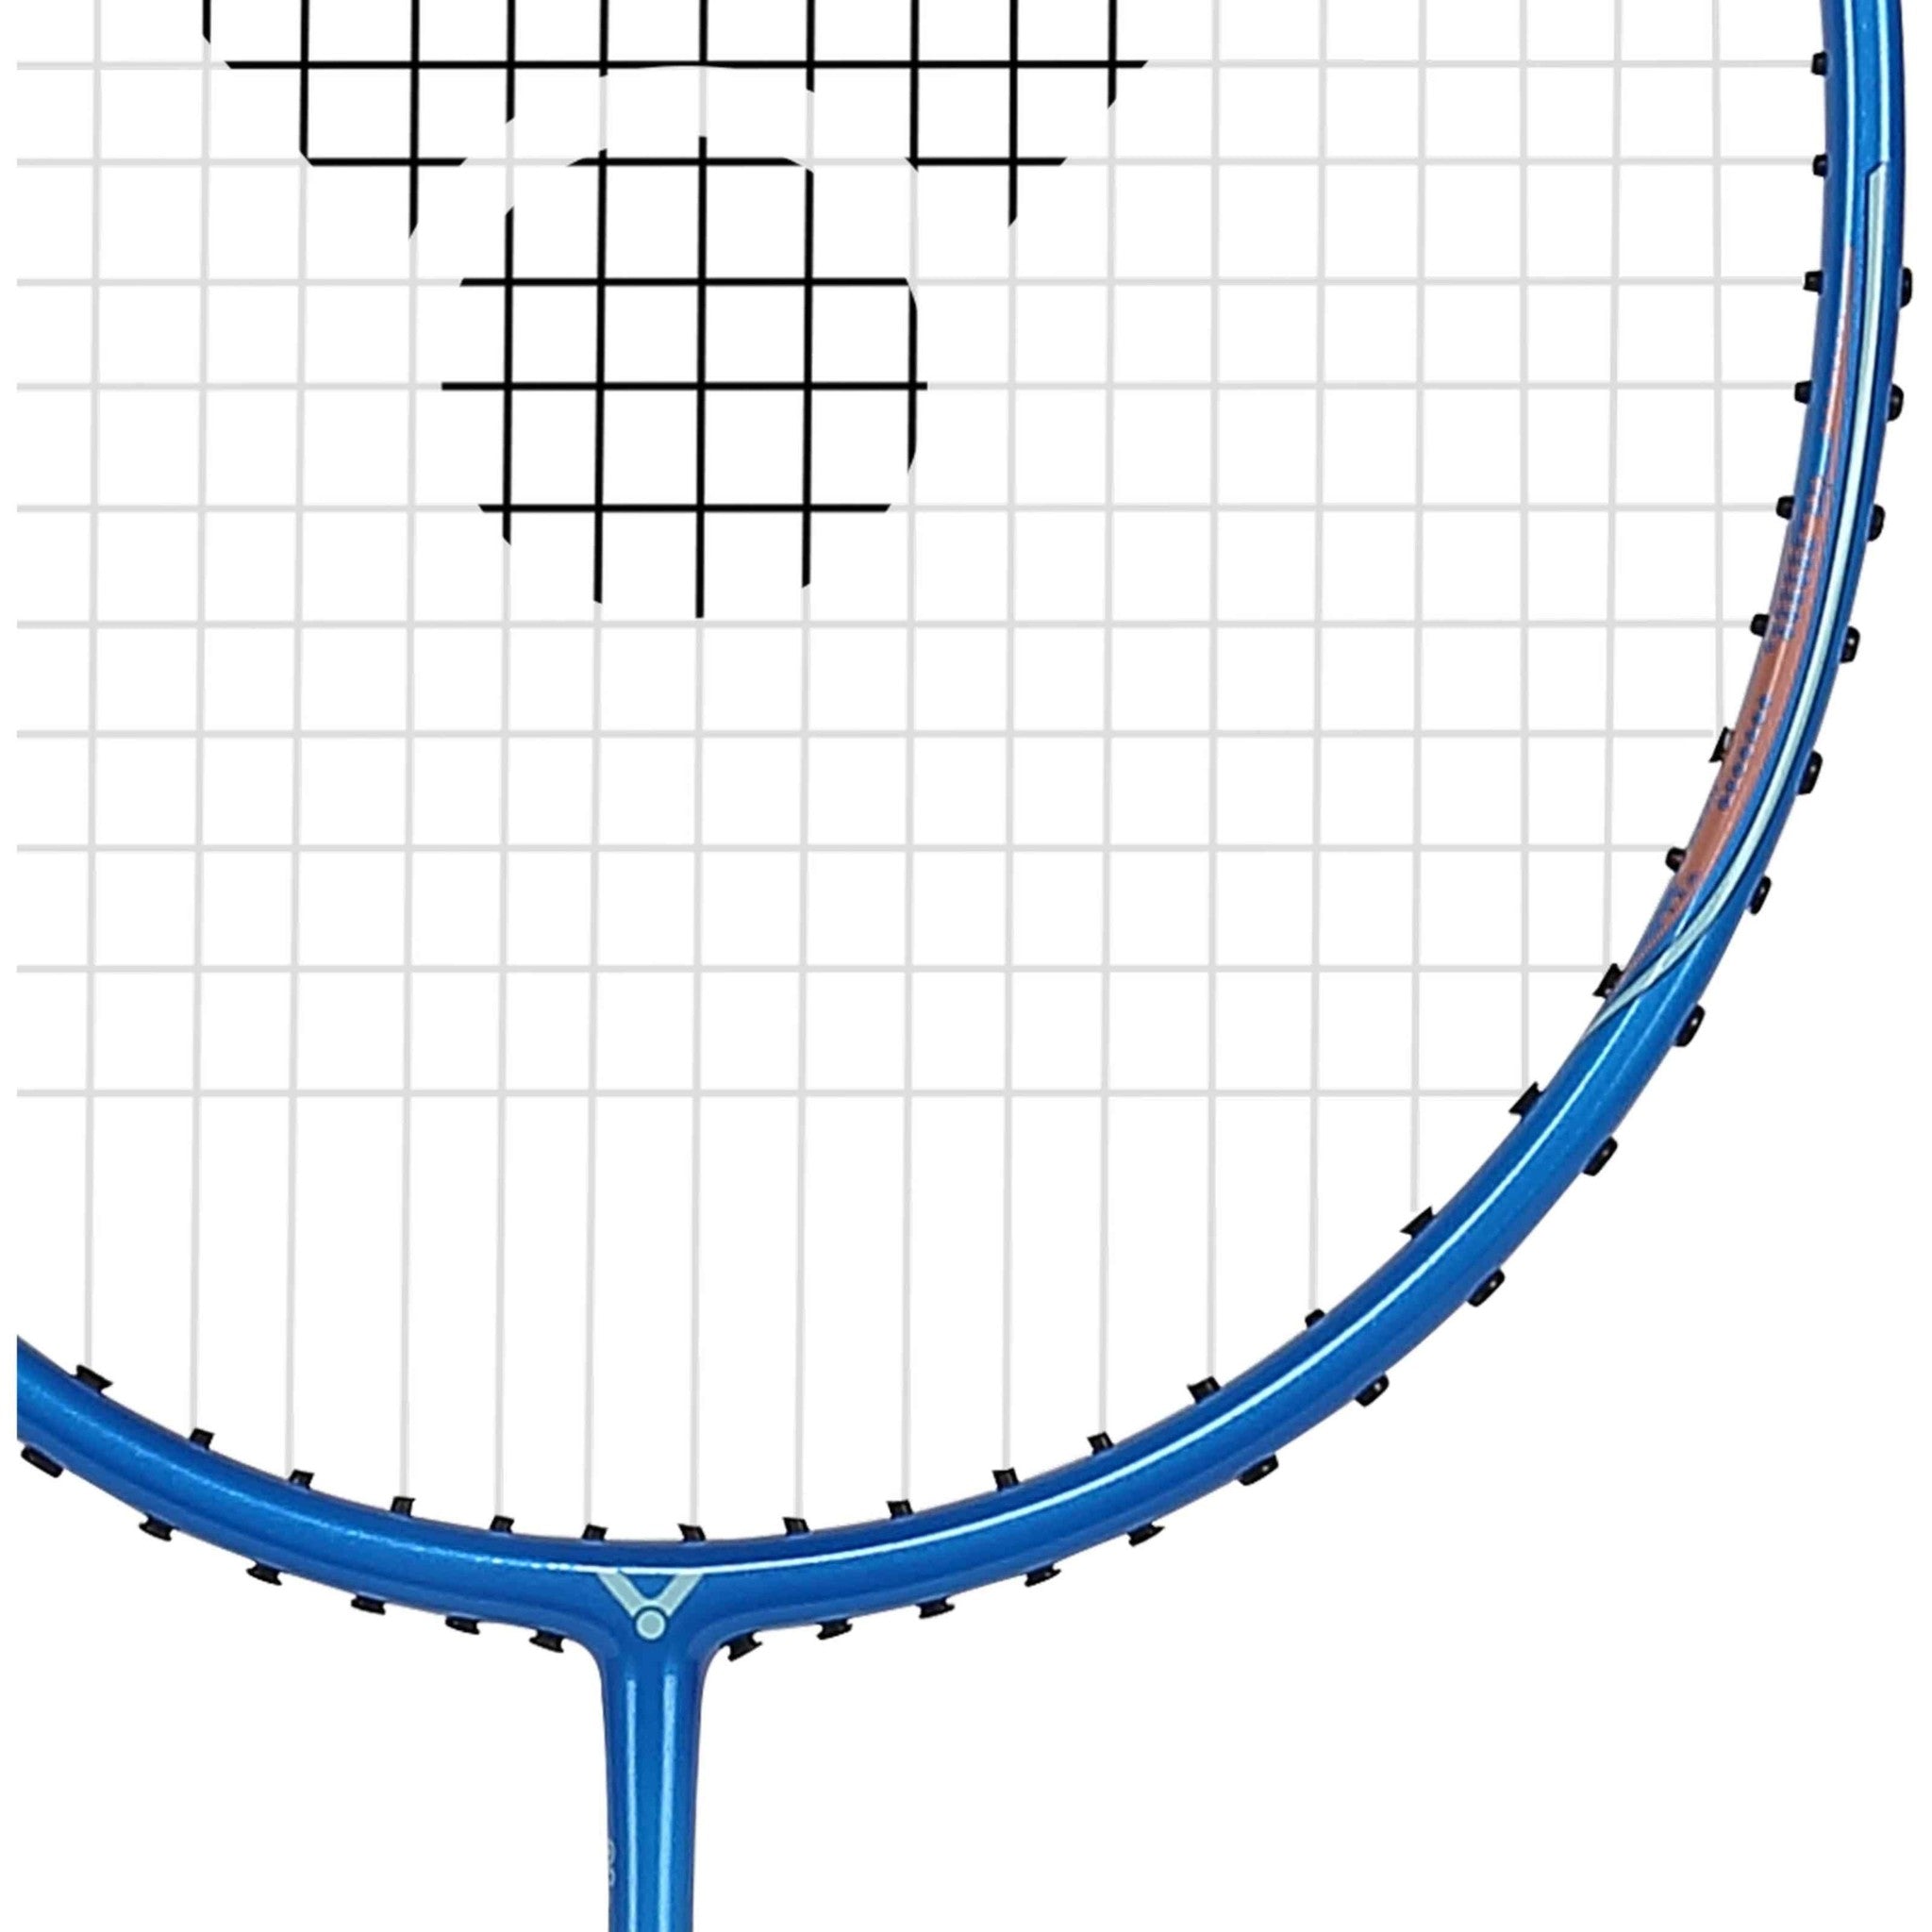 Victor DriveX 09 M Badminton Racket - Strung